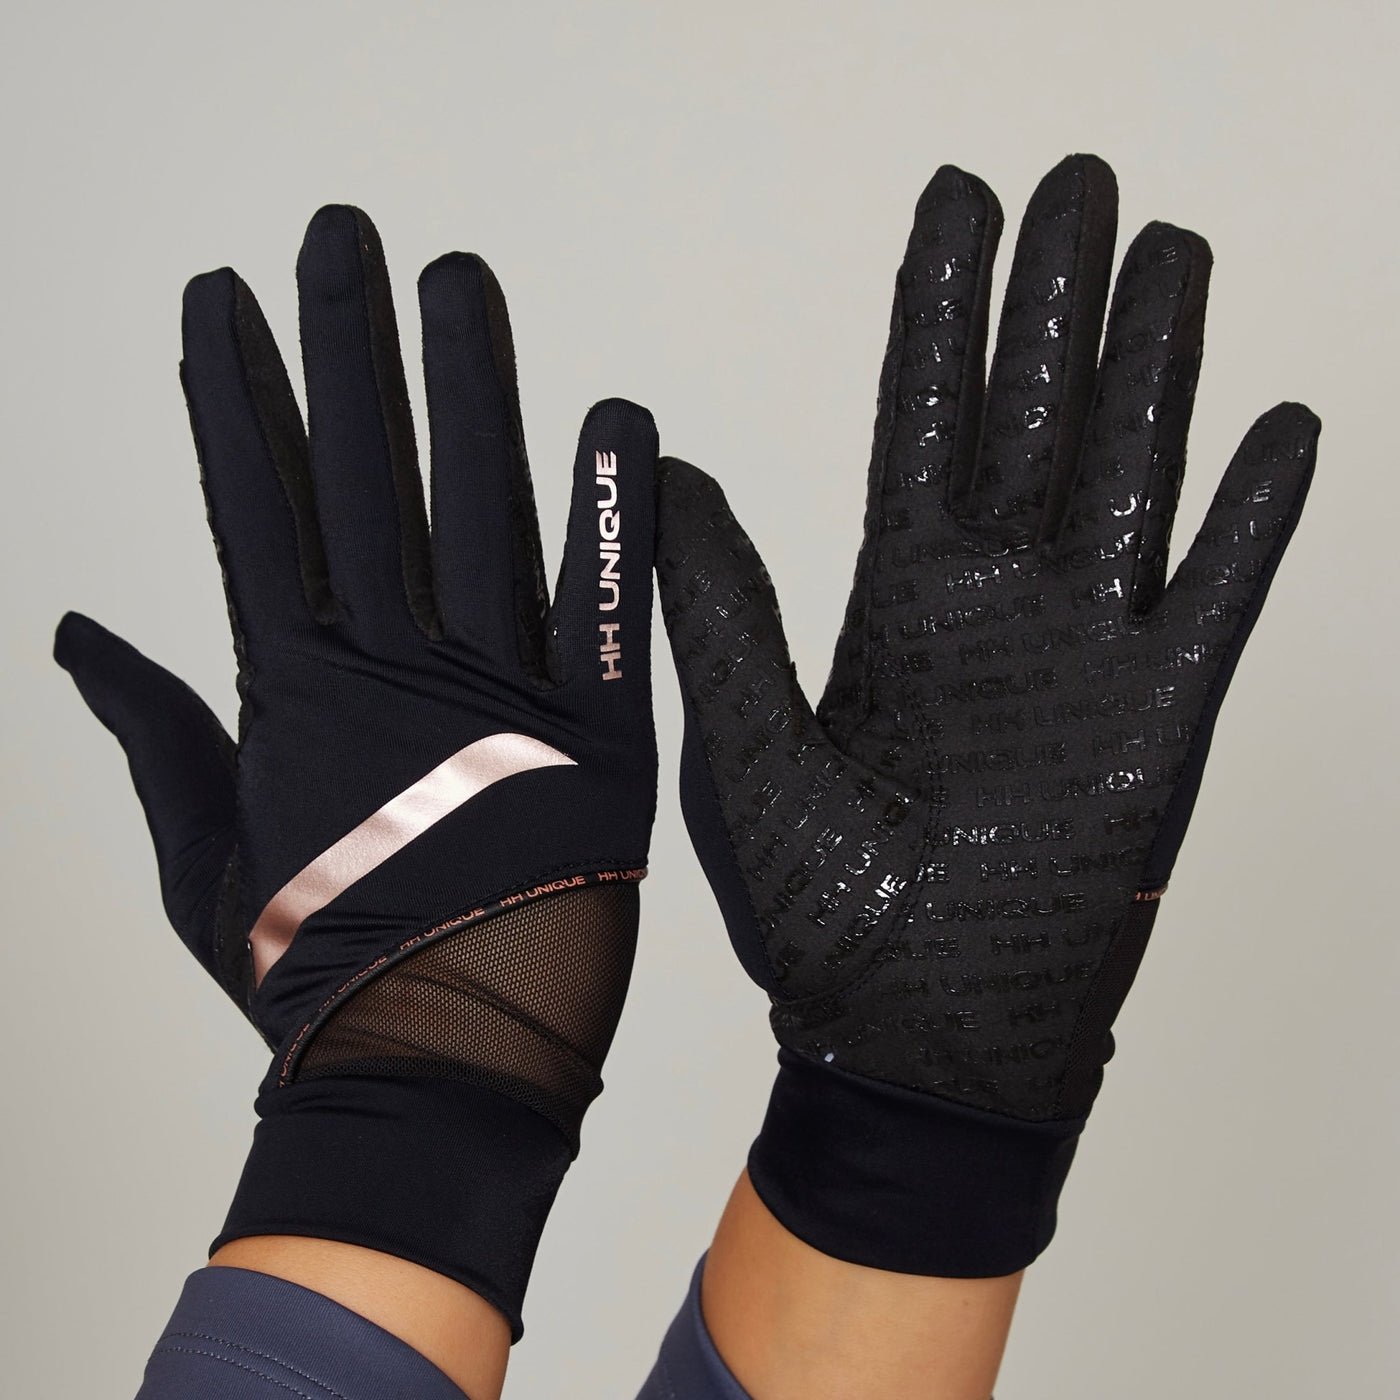 Gloves - Riding CC AirGrip - Horzehoods